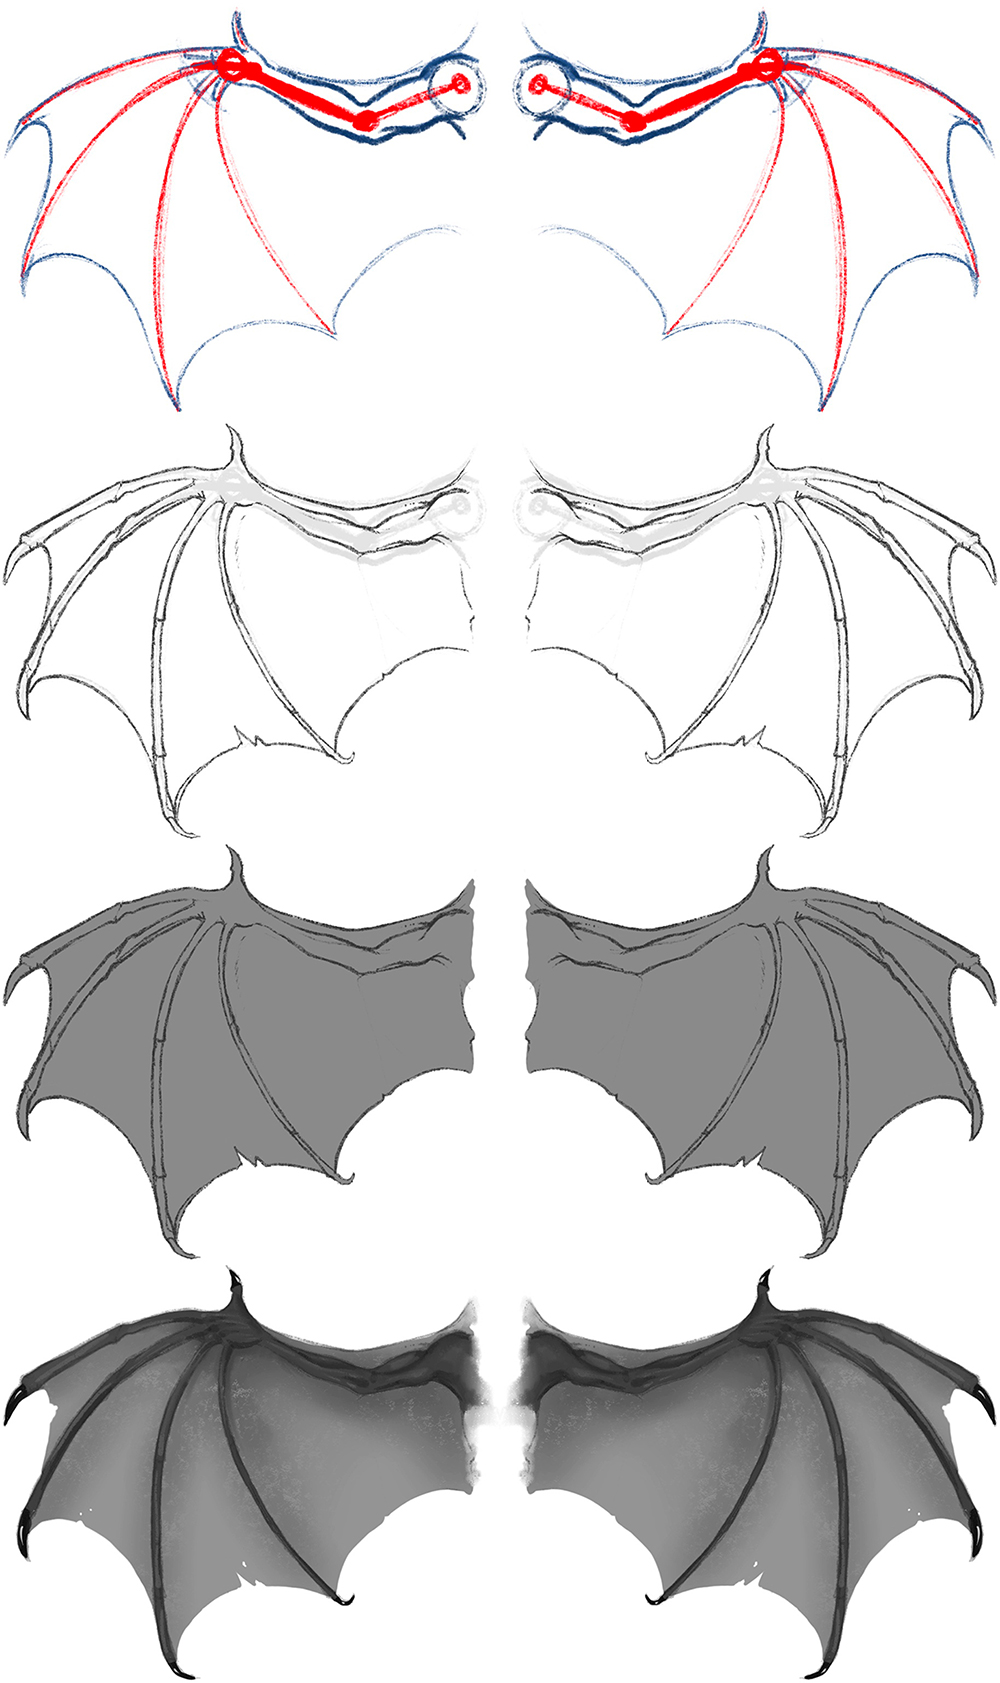 demons drawings with wings